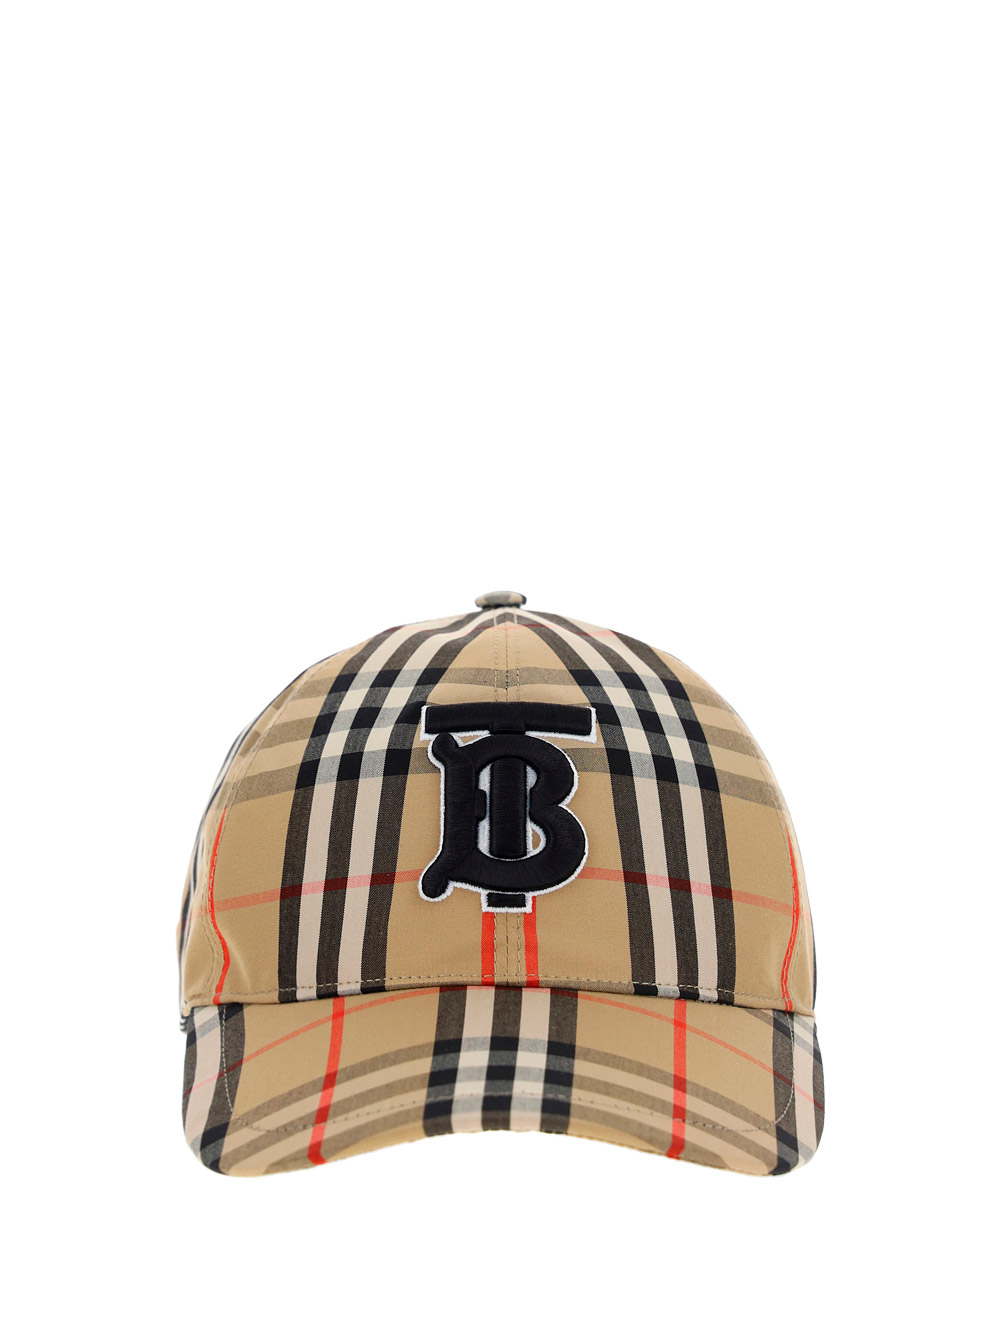 BURBERRY BASEBALL HAT,8038504_ARCHIVEBEI